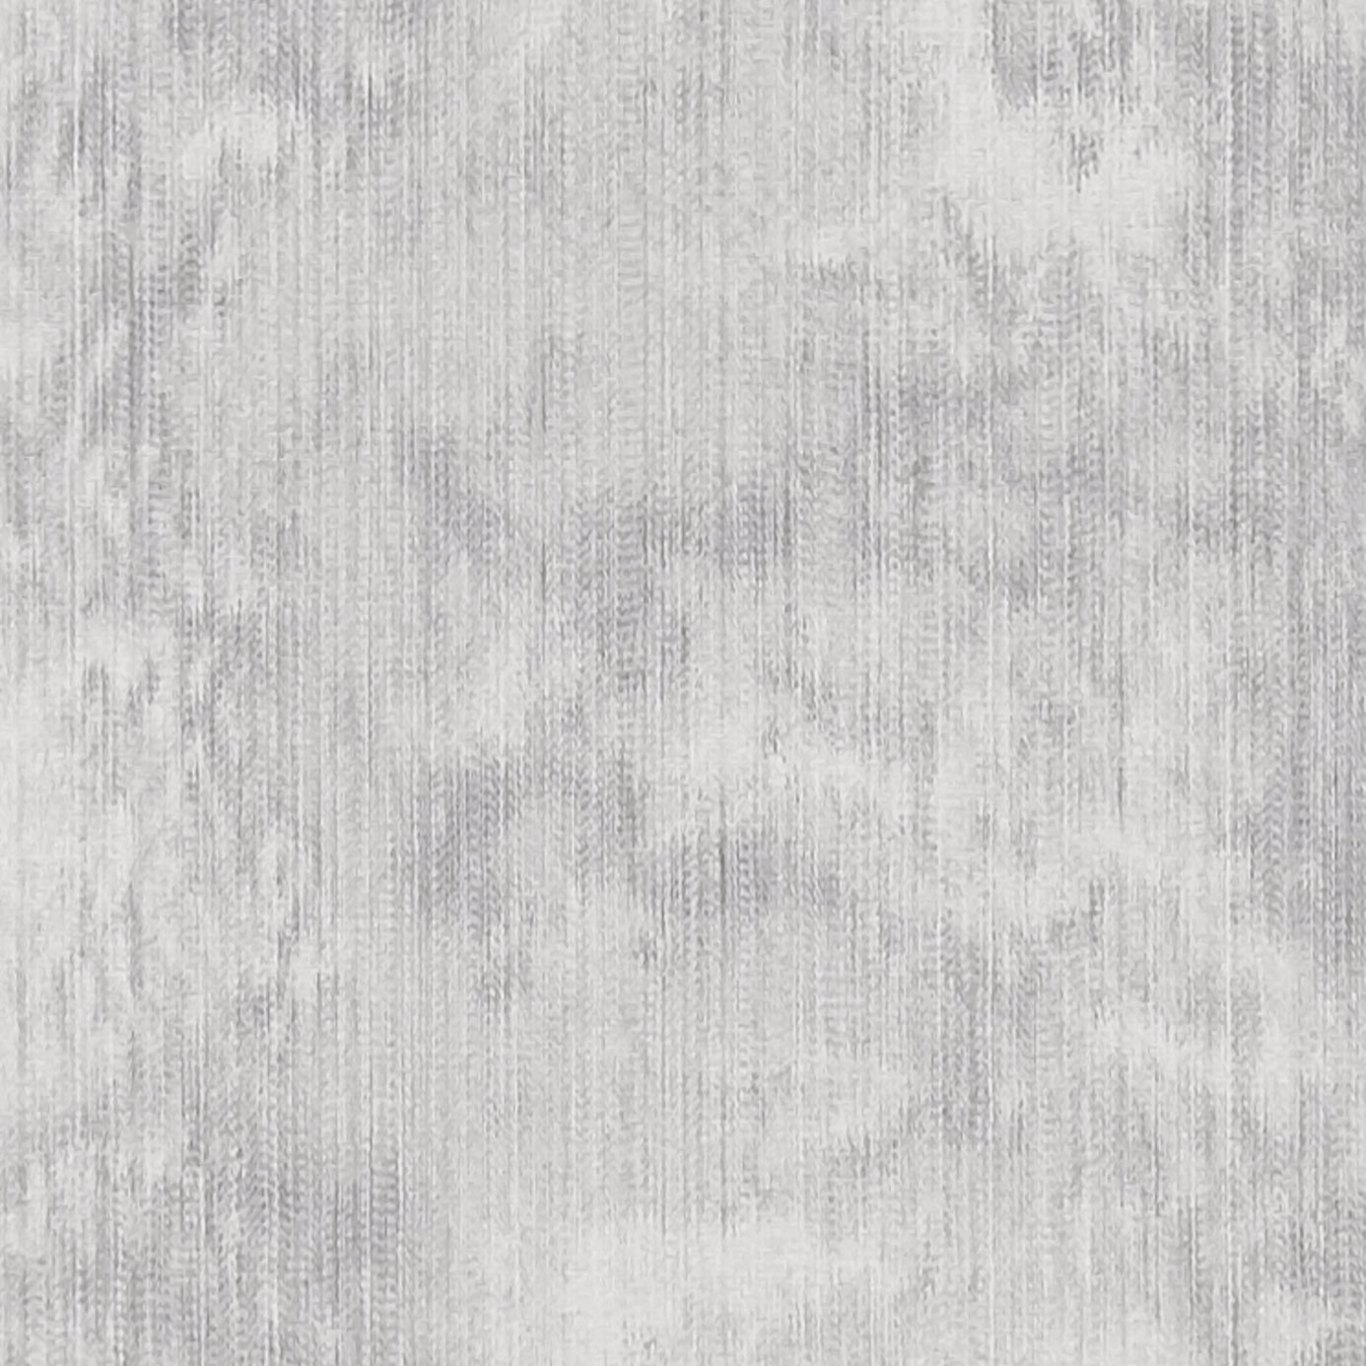 Haze Silver Fabric by CNC